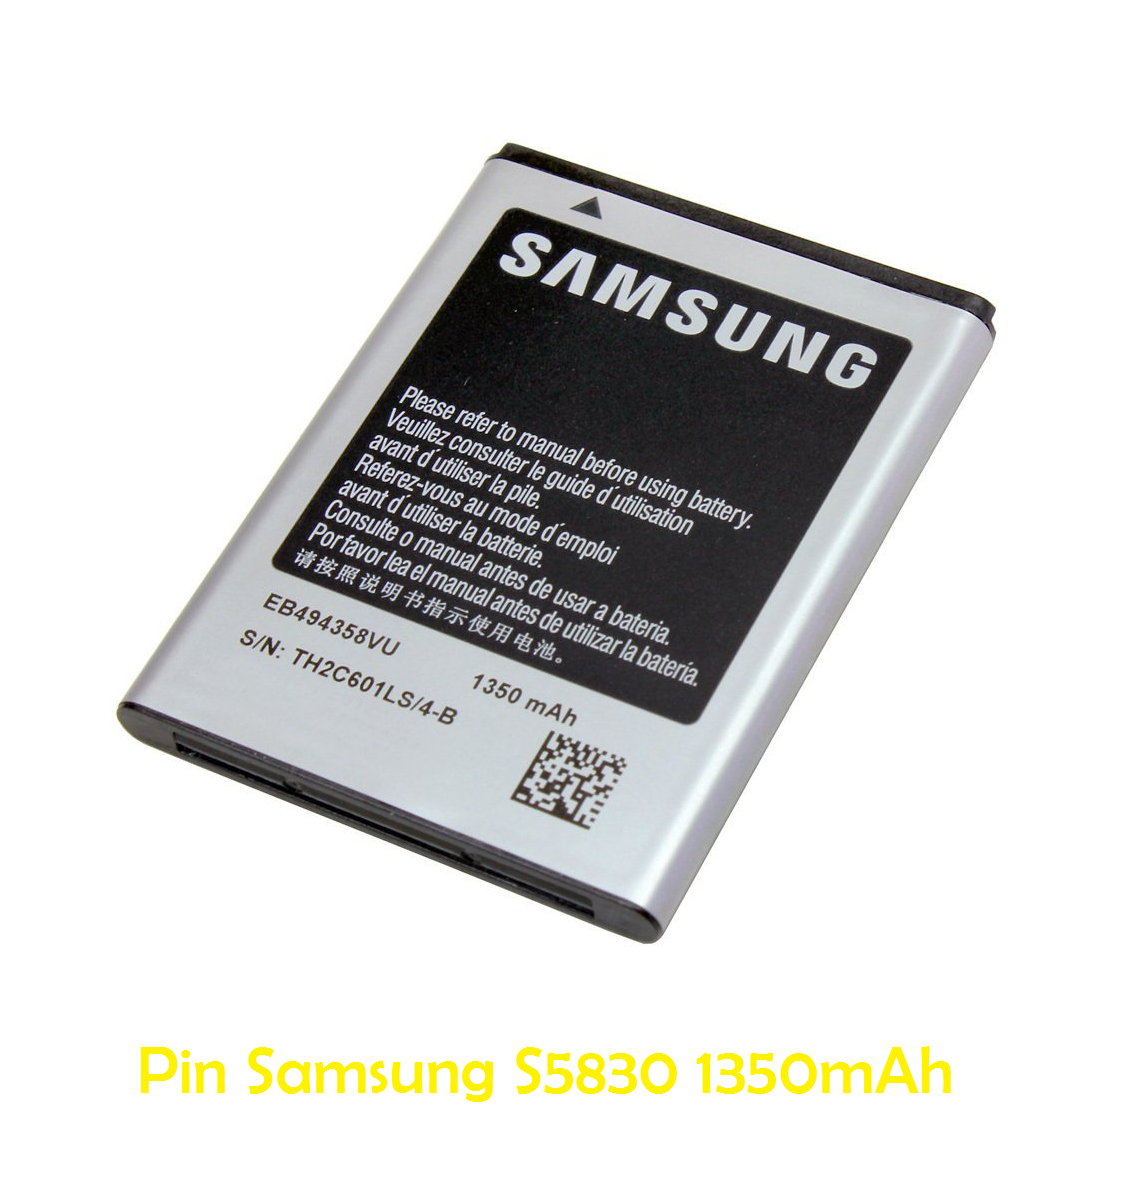 Pin Samsung Galaxy Ace S5830